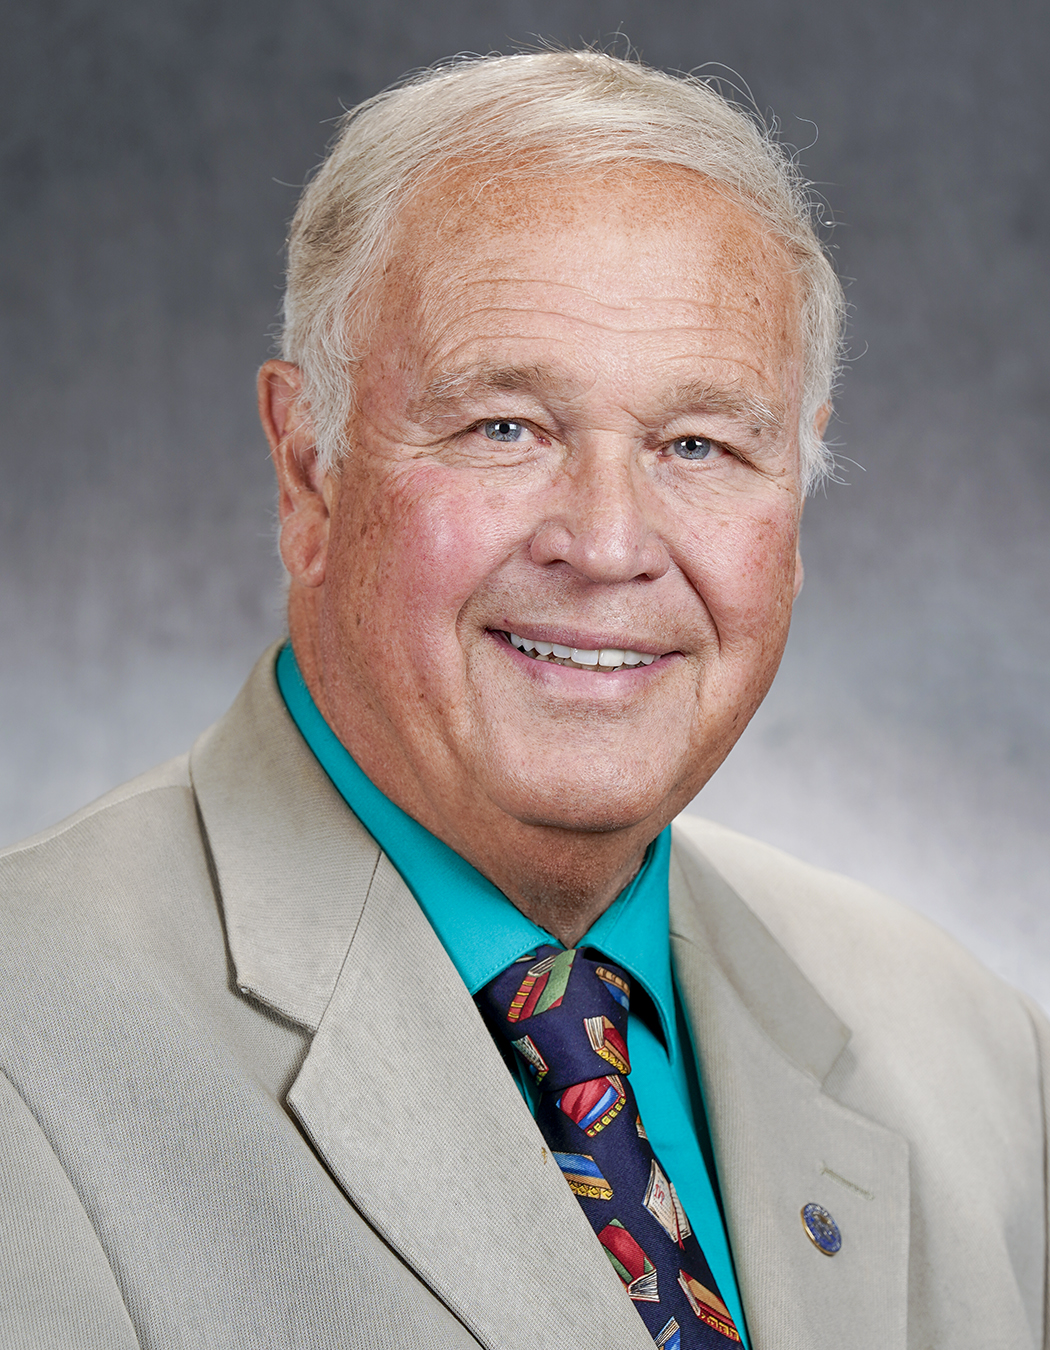  senator Dean Urdahl